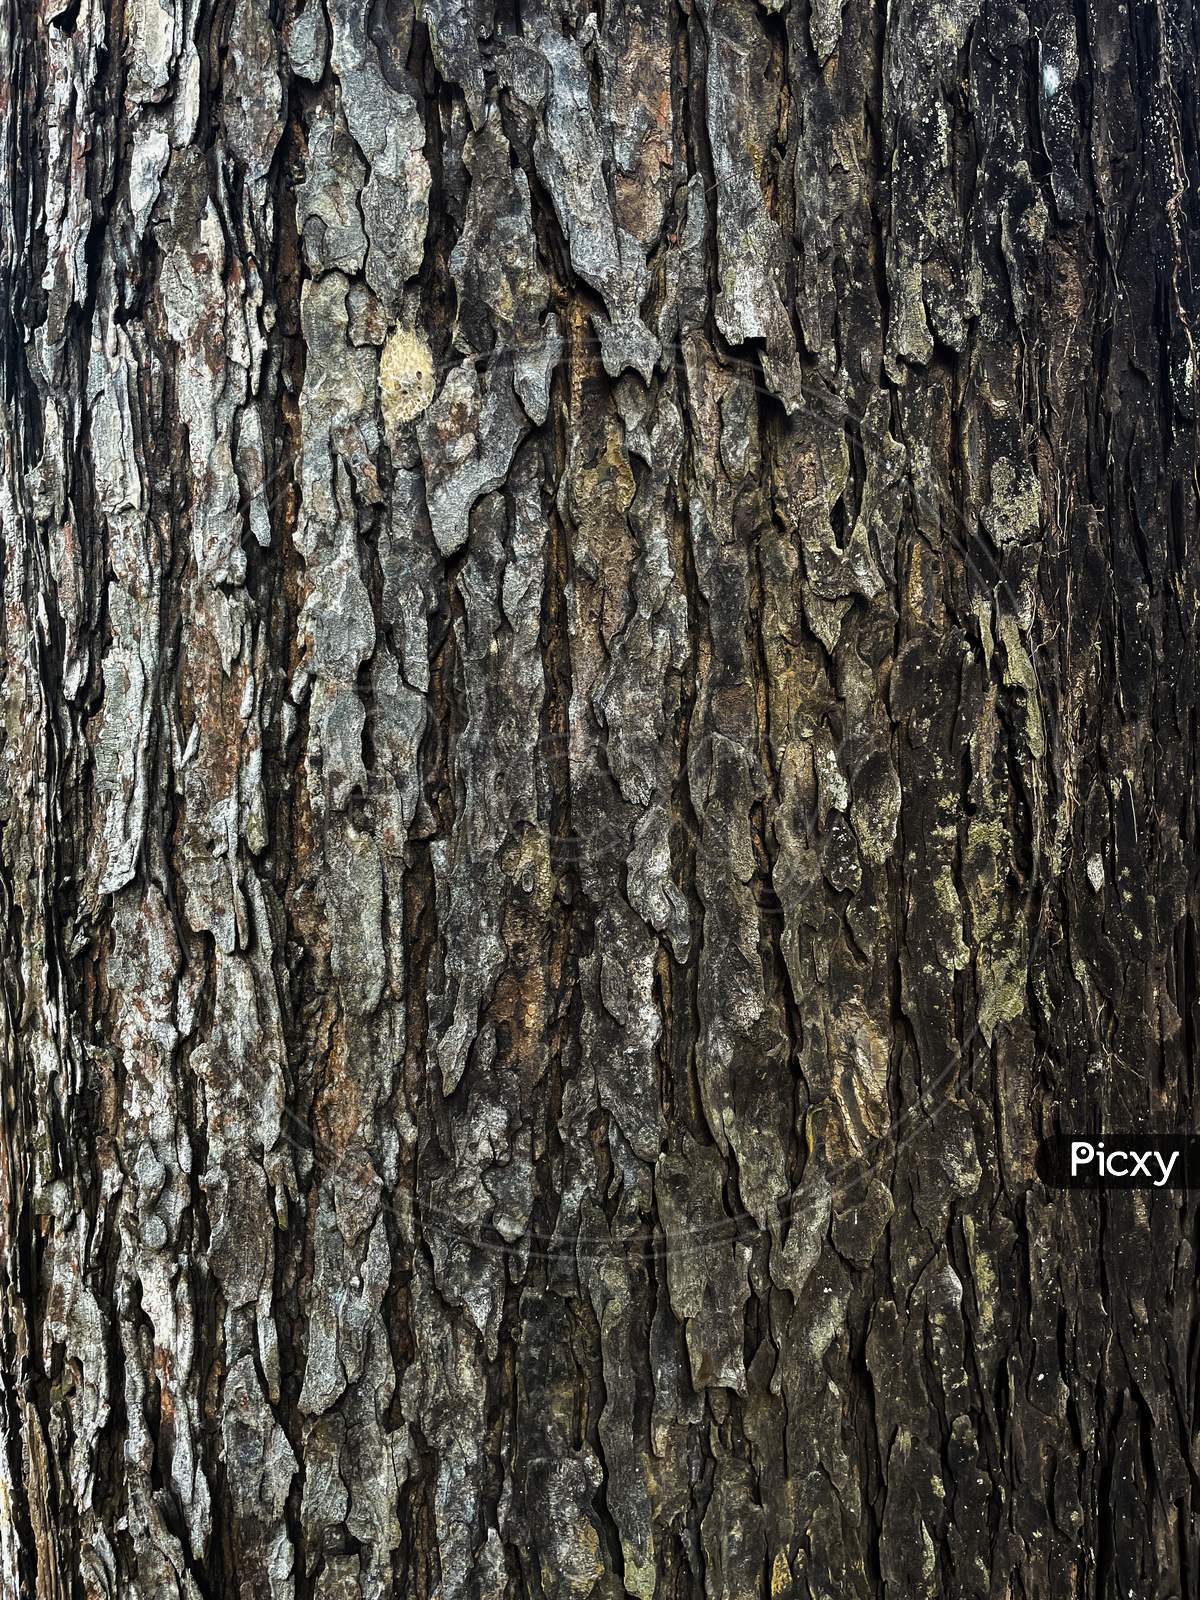 Image Of Bark Texture Of Swietenia Tree.Seamless Texture Of Mahogany Tree